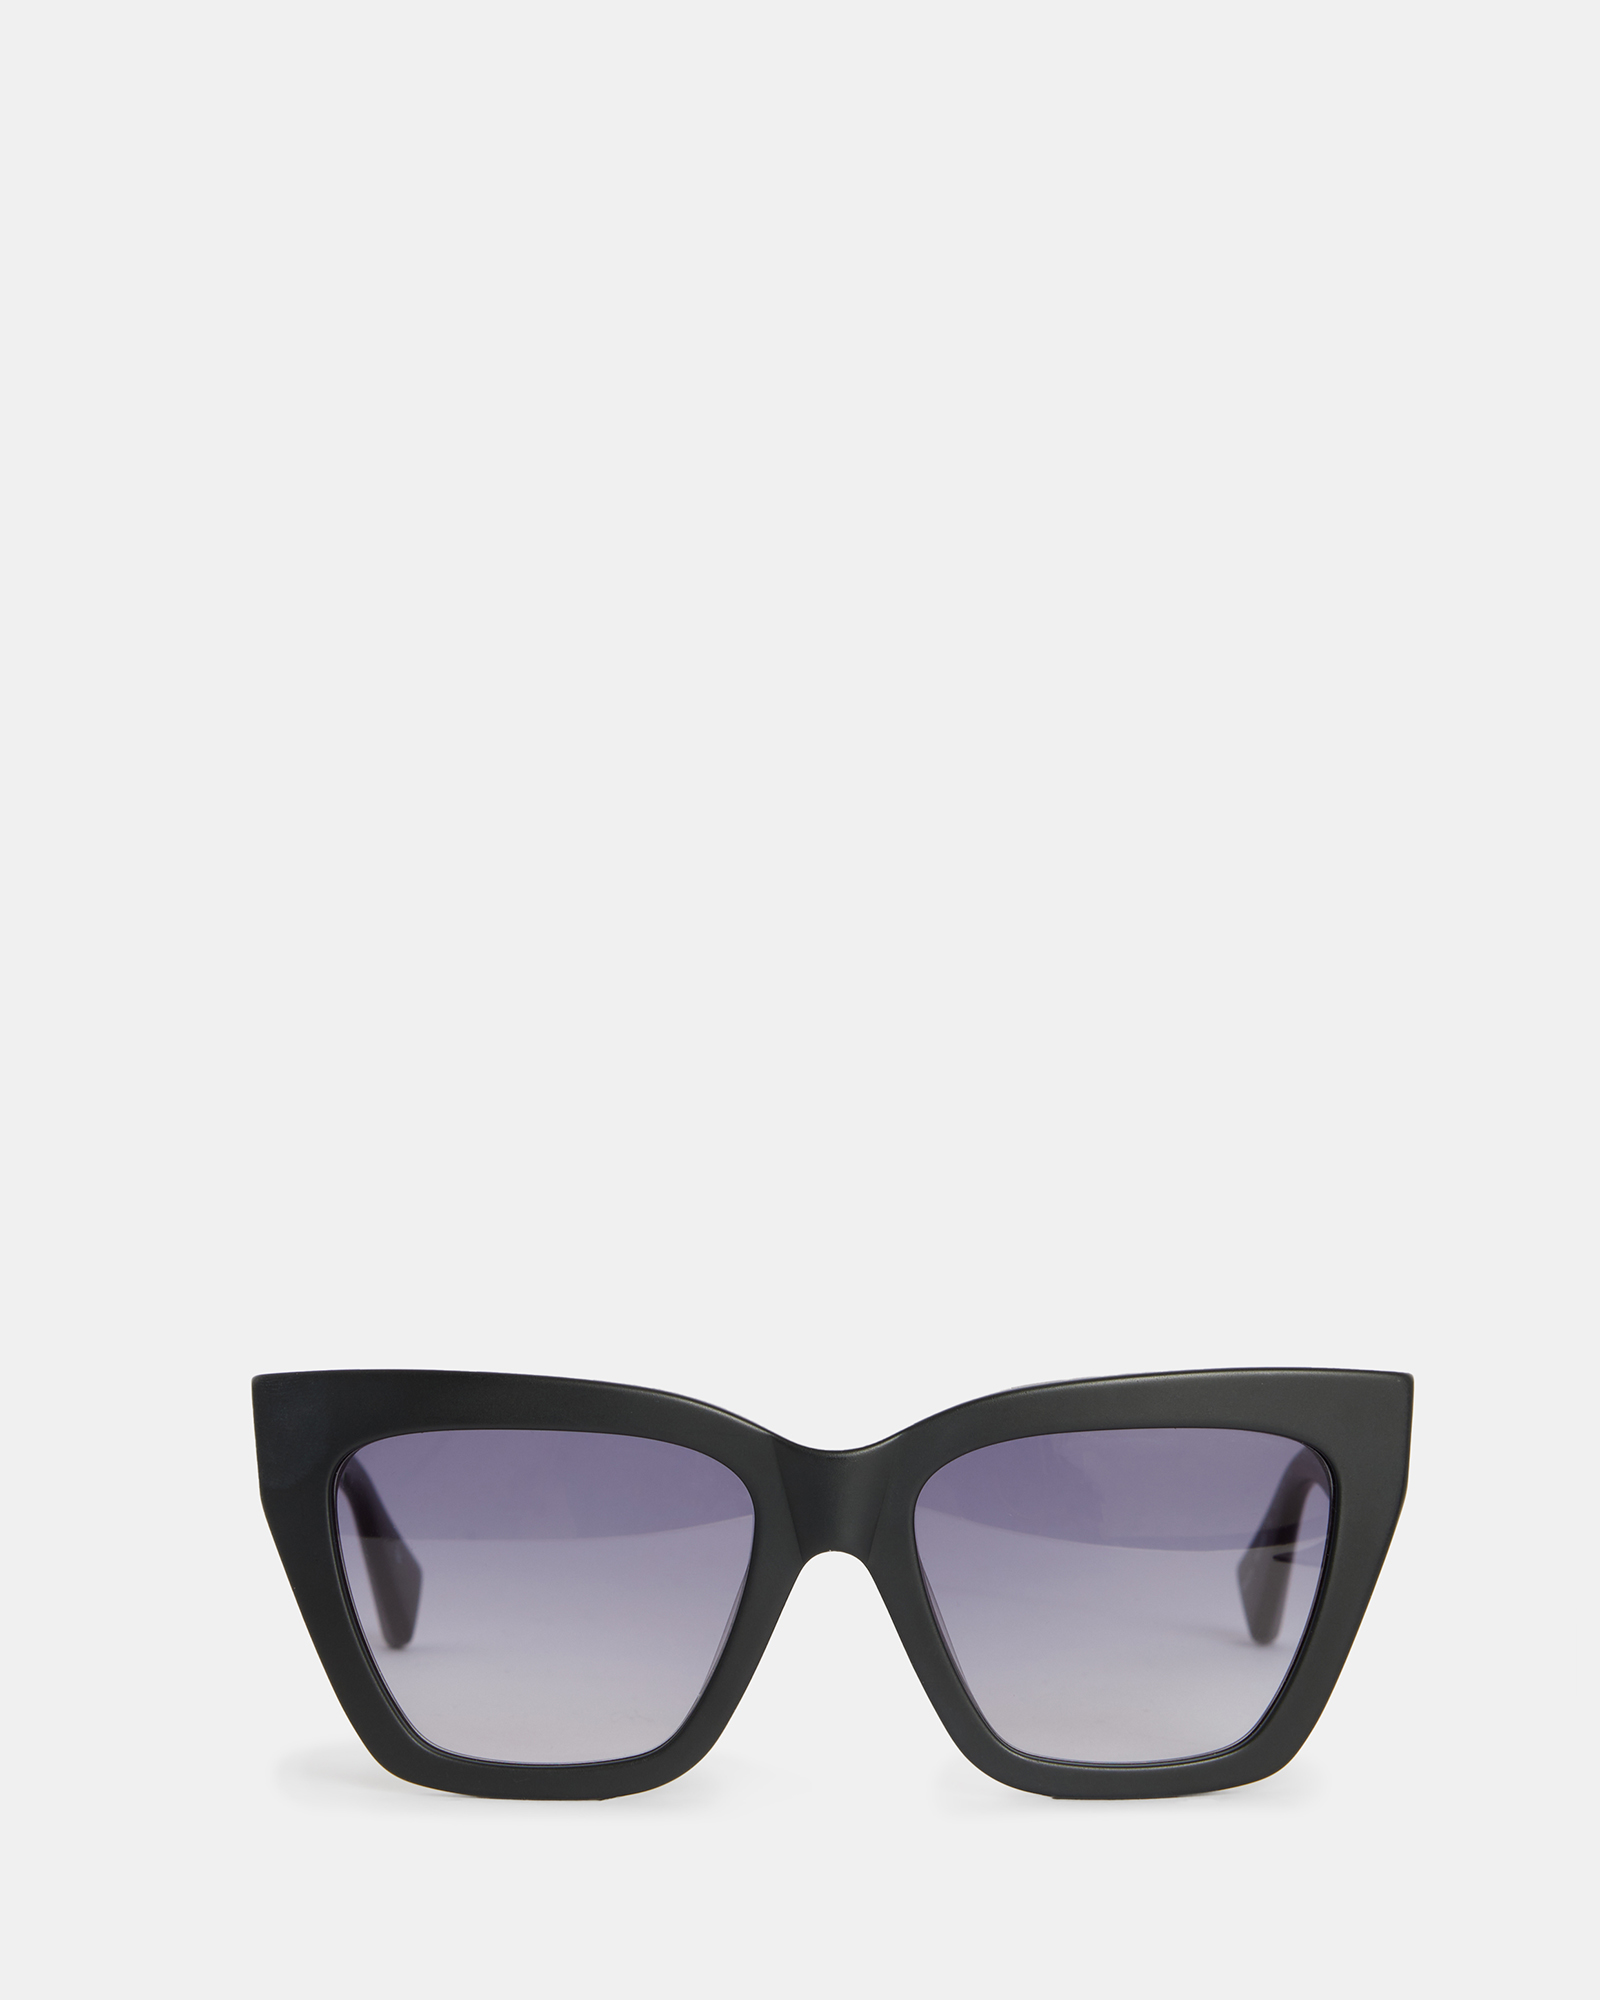 AllSaints Minerva Square Cat Eye Sunglasses,, Black, Size: One Size